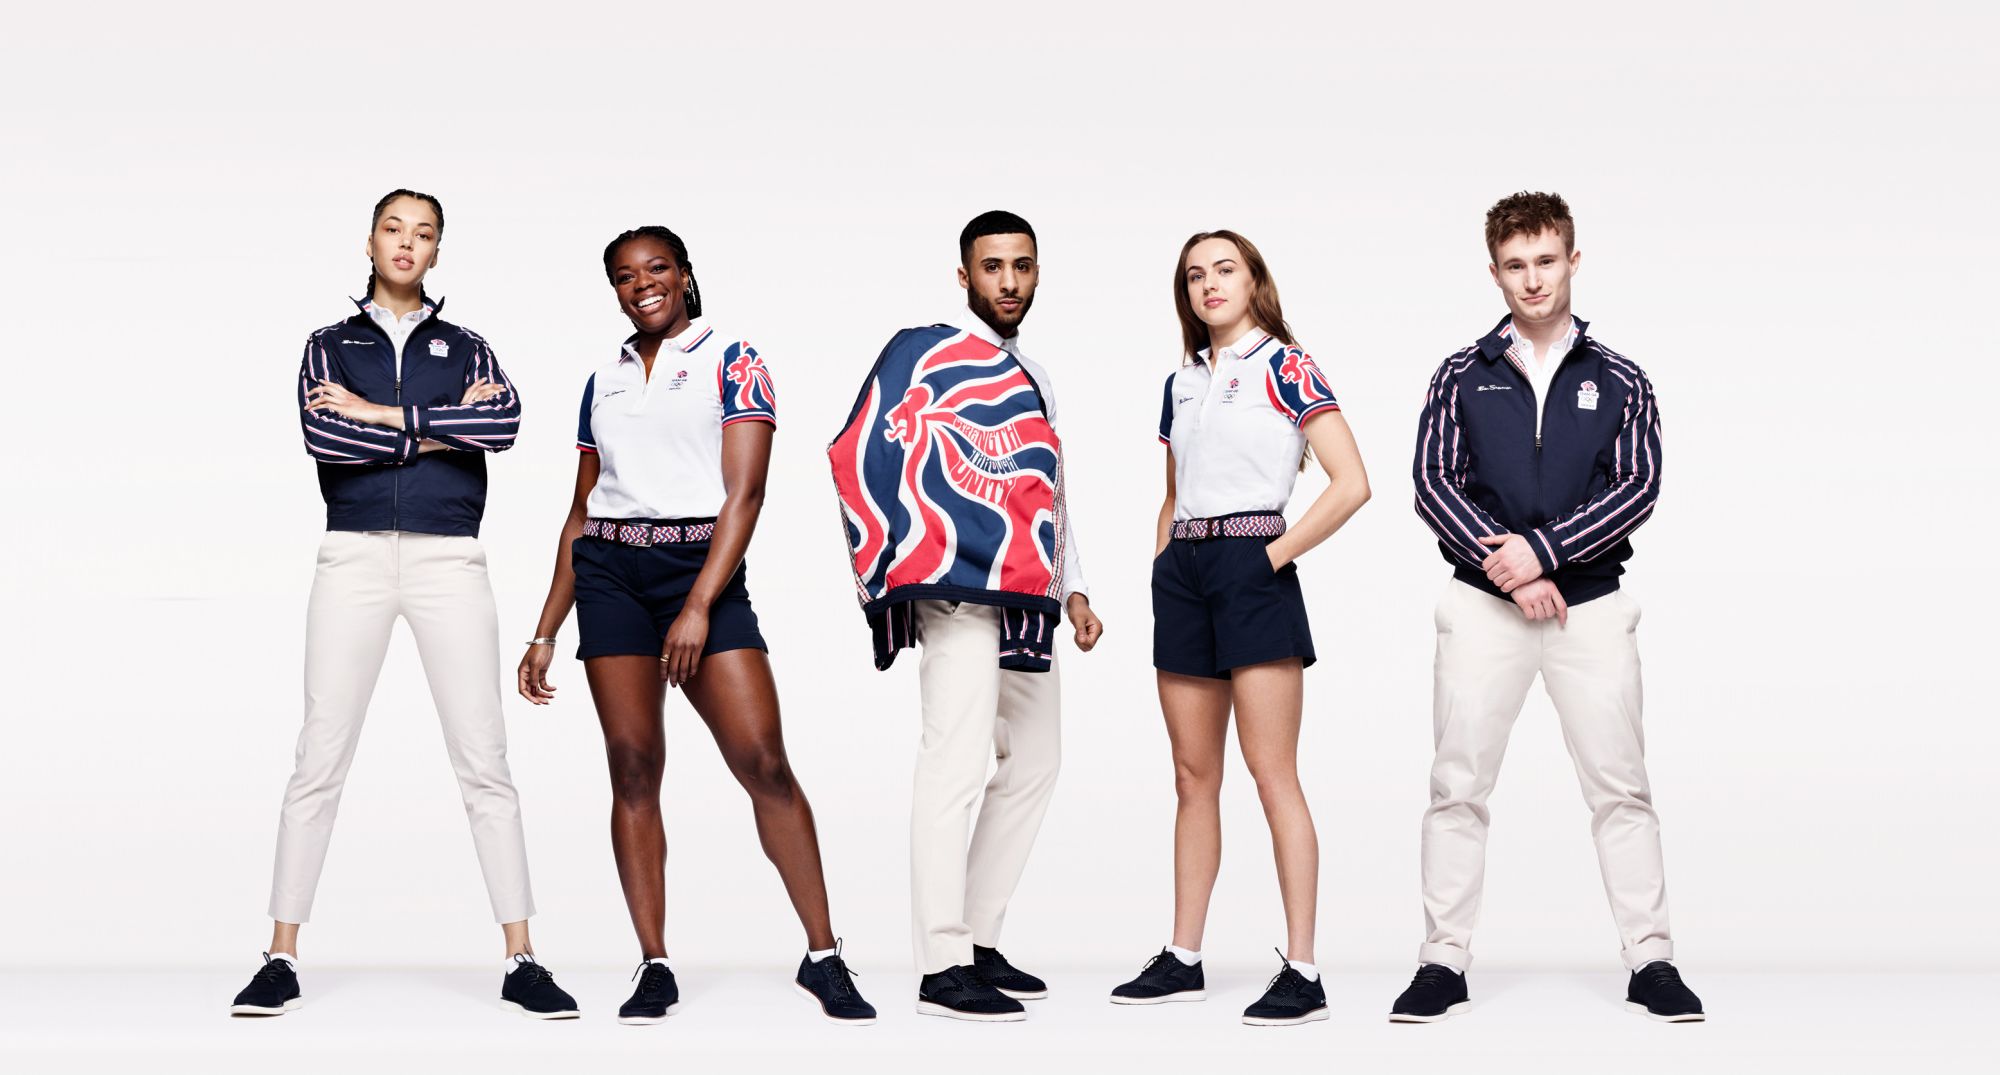 Team GB unveils 2021 Olympic uniform